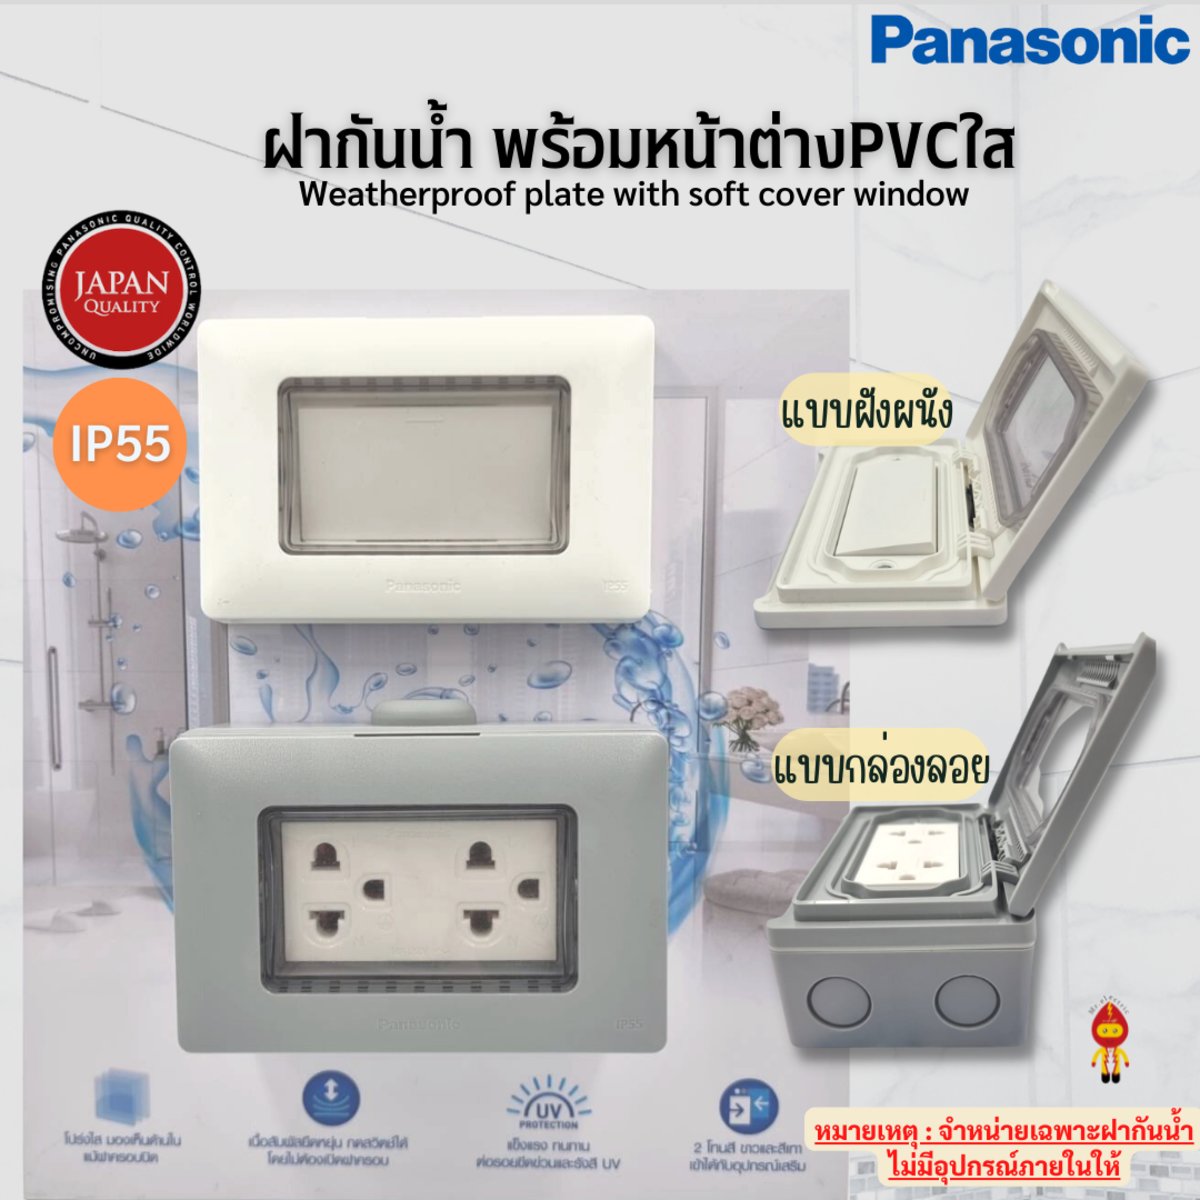 Panasonic ฝากันน้ำ พร้อมหน้าต่าง PVC มองเห็นข้างใน ขาด 2X4